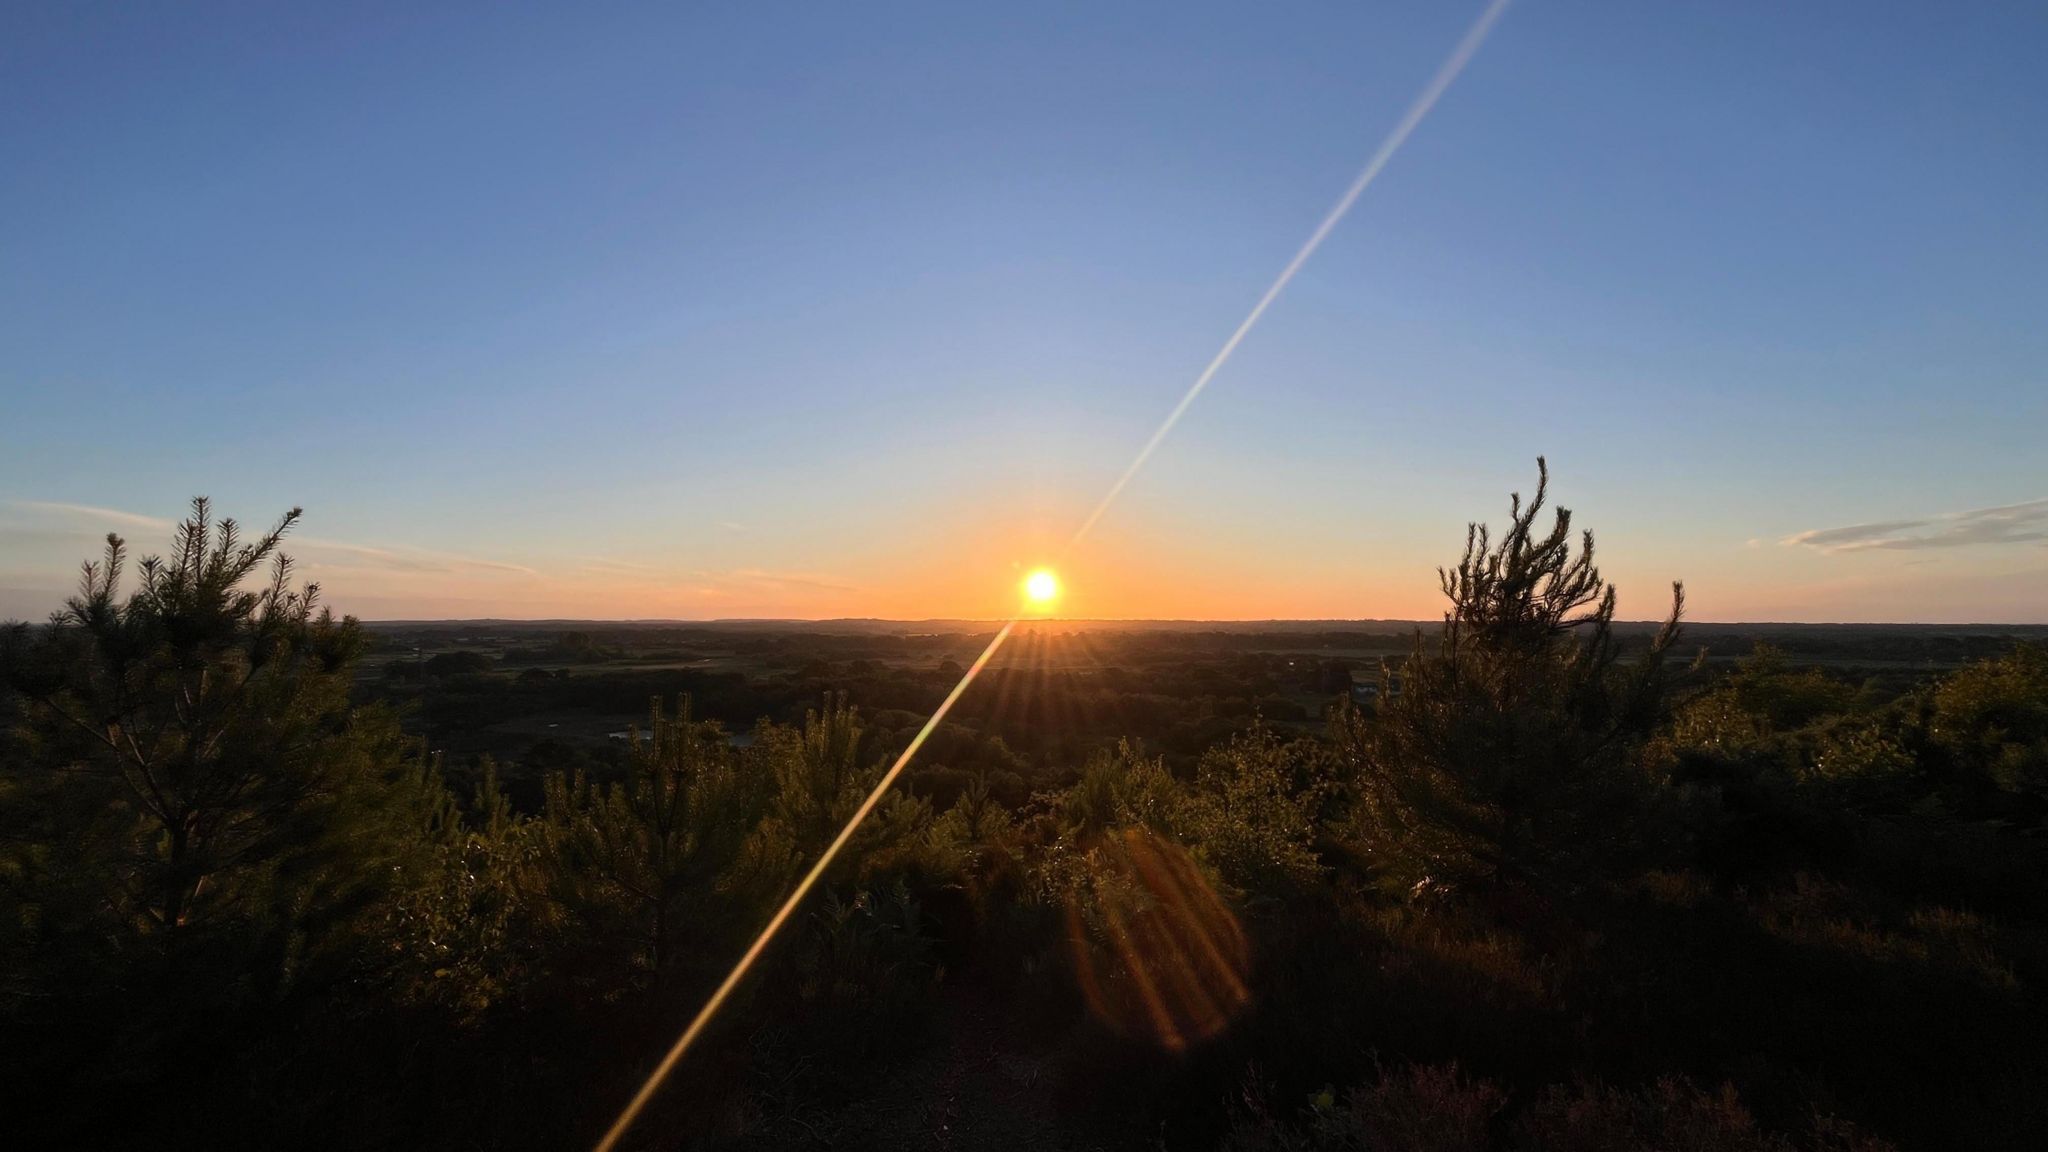 SUNDAY - The sunrises with a lens flare over heathland